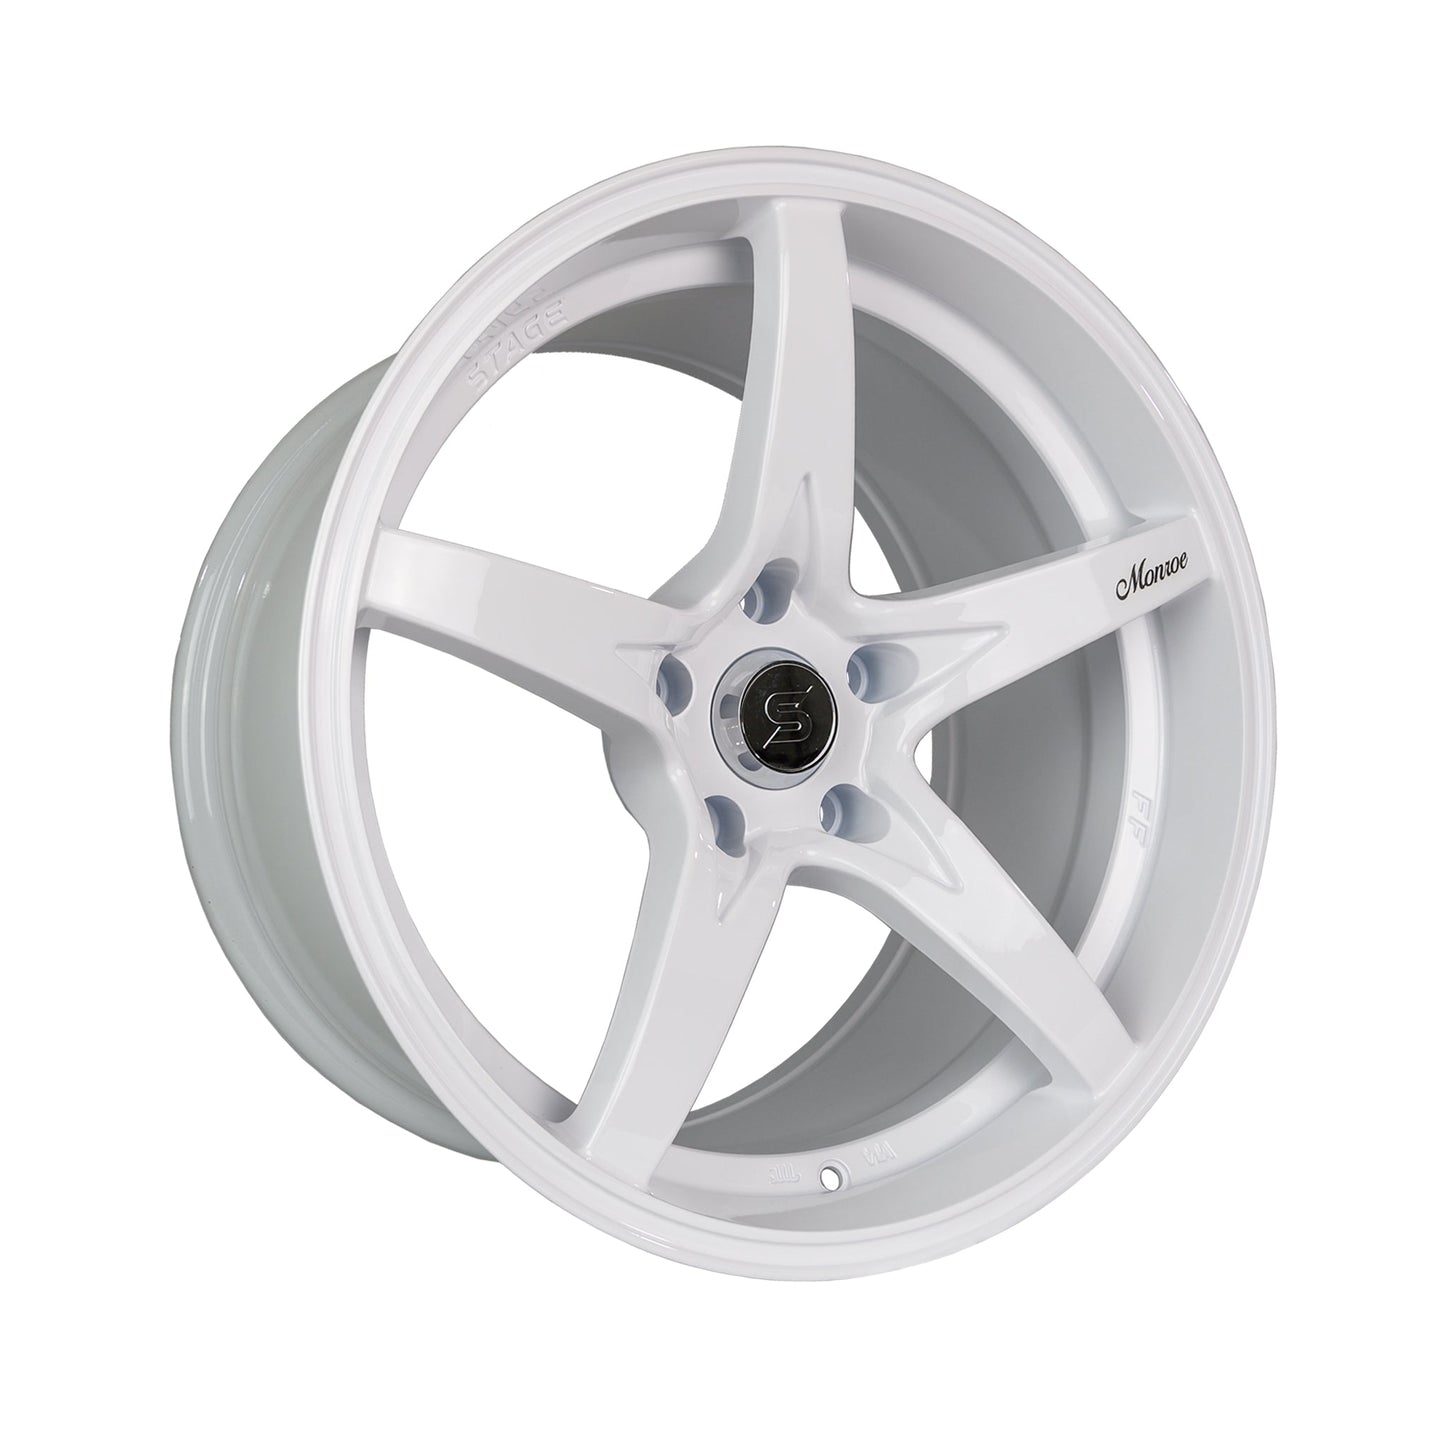 Stage Wheels Monroe 18x10 +0mm 5x114.3 CB: 73.1 Color: White